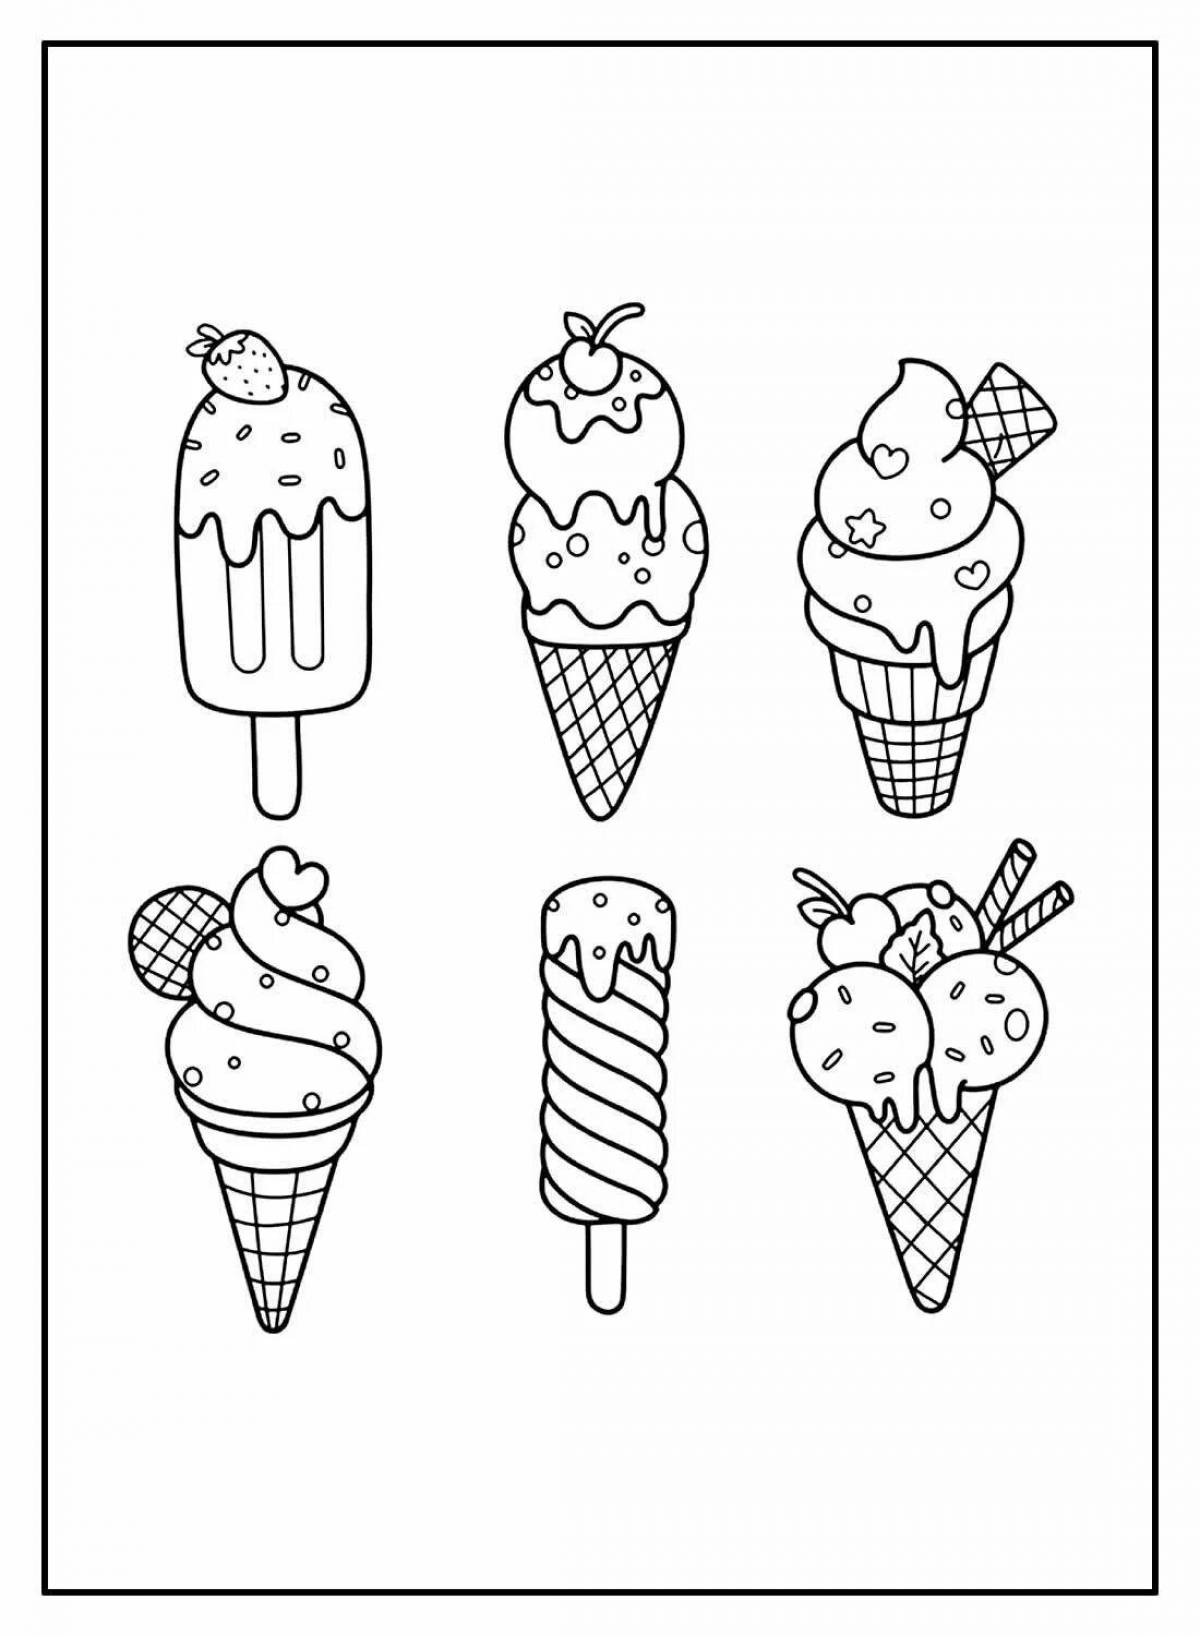 A fun ice cream coloring book for kids